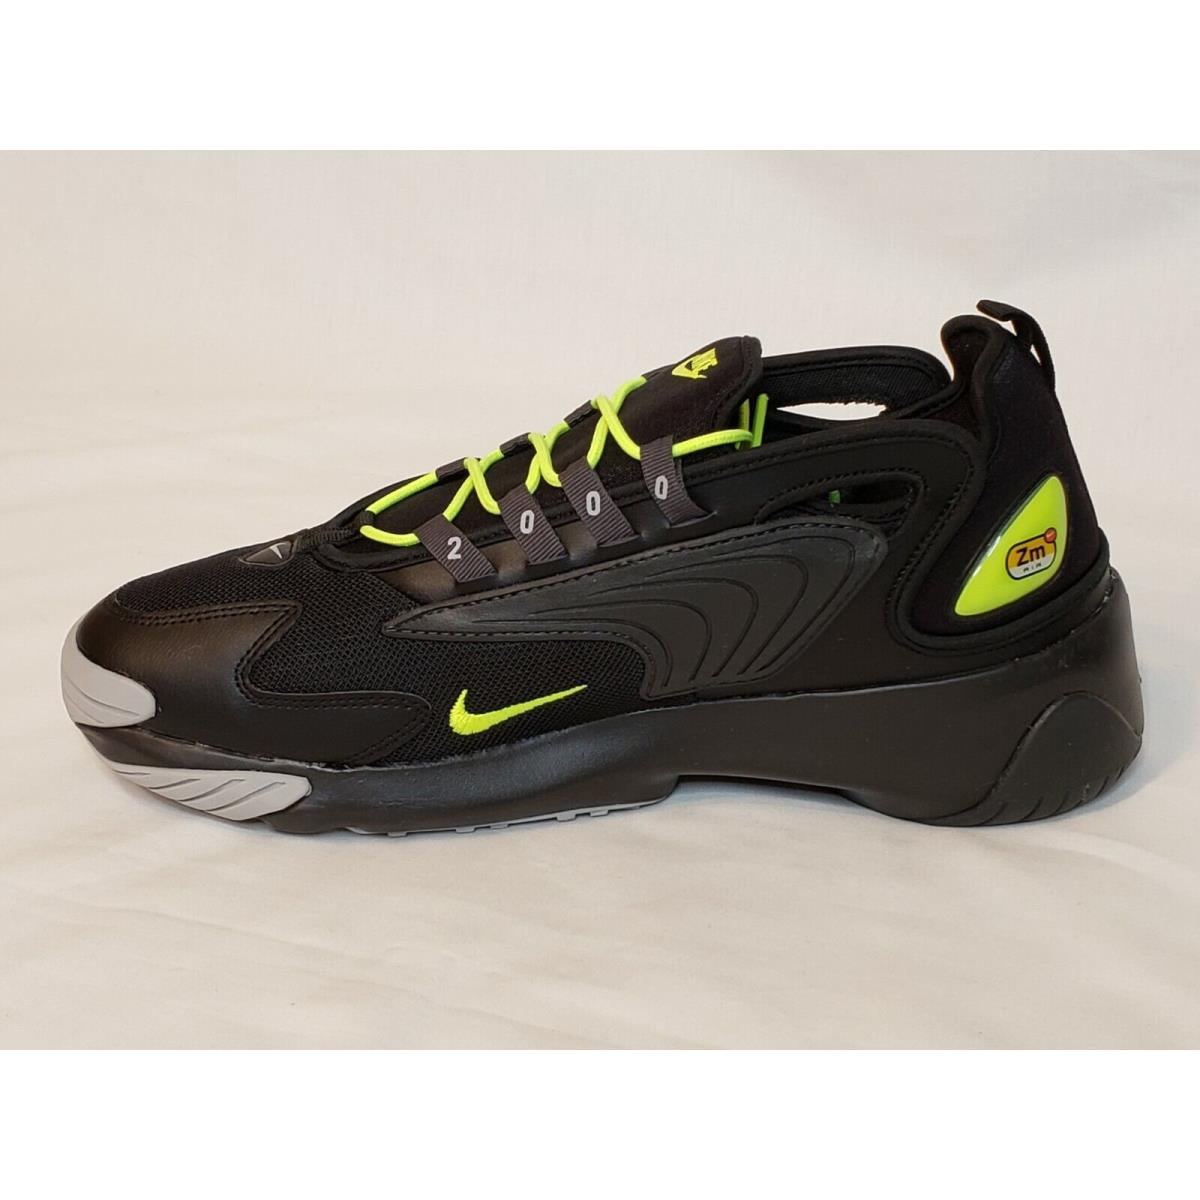 Nike shoes Zoom - Black/Volt-Anthracite 4